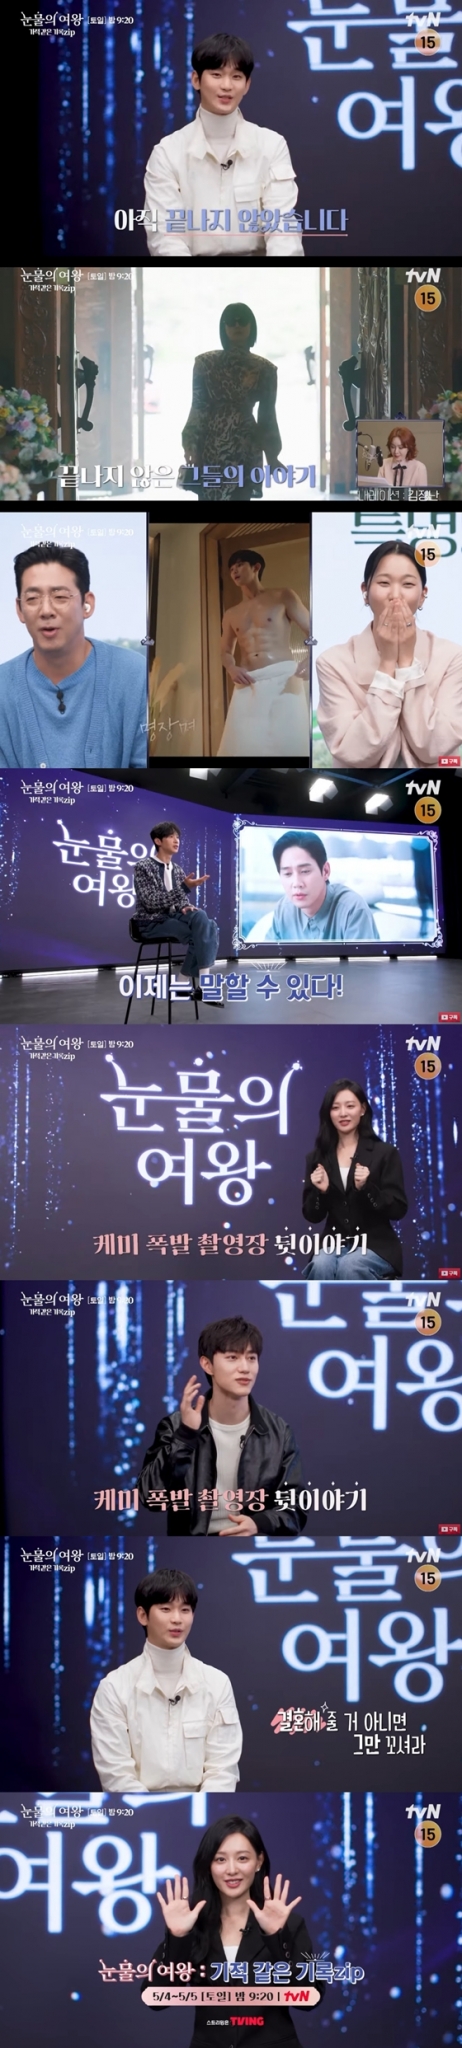  tvN '눈물의 여왕 : 기적 같은 기록.zip'/사진=유튜브 채널 'tvN drama' 영상 캡처